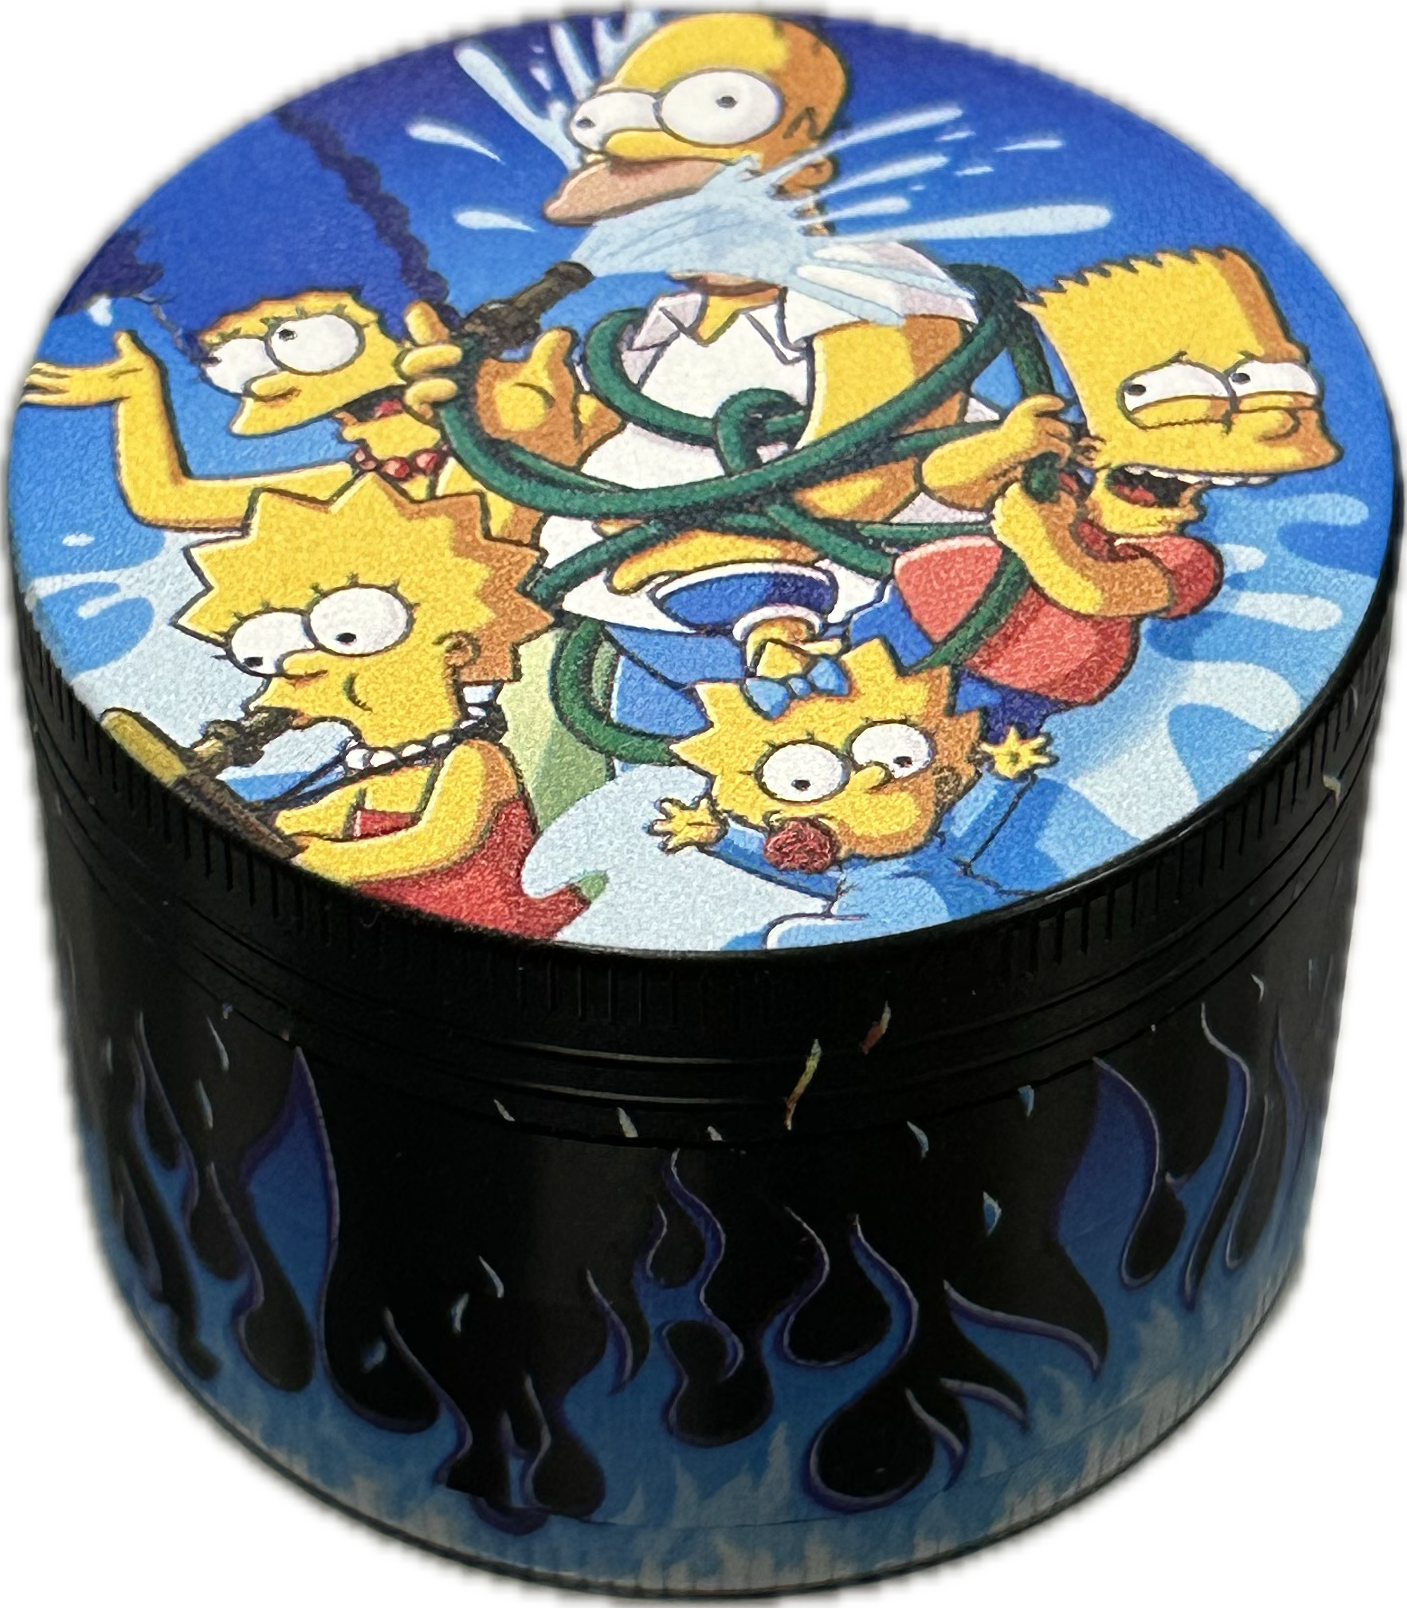 The Simpsons grinder mini